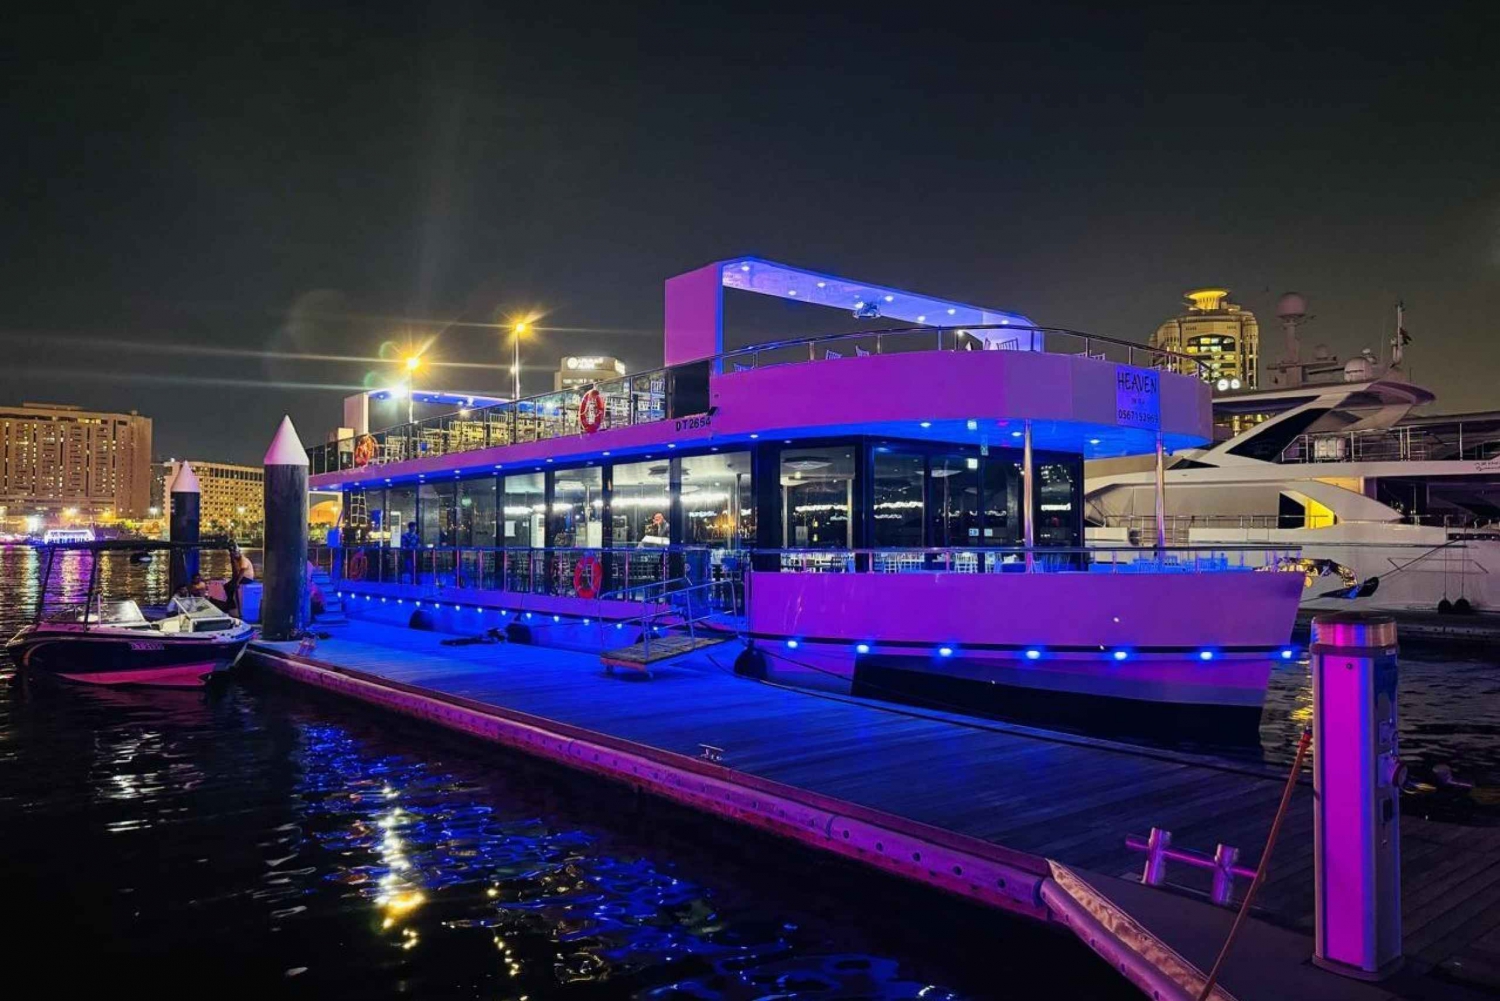 Dîner de croisière sur le catamaran VIP de Dubaï (buffet multicusine)